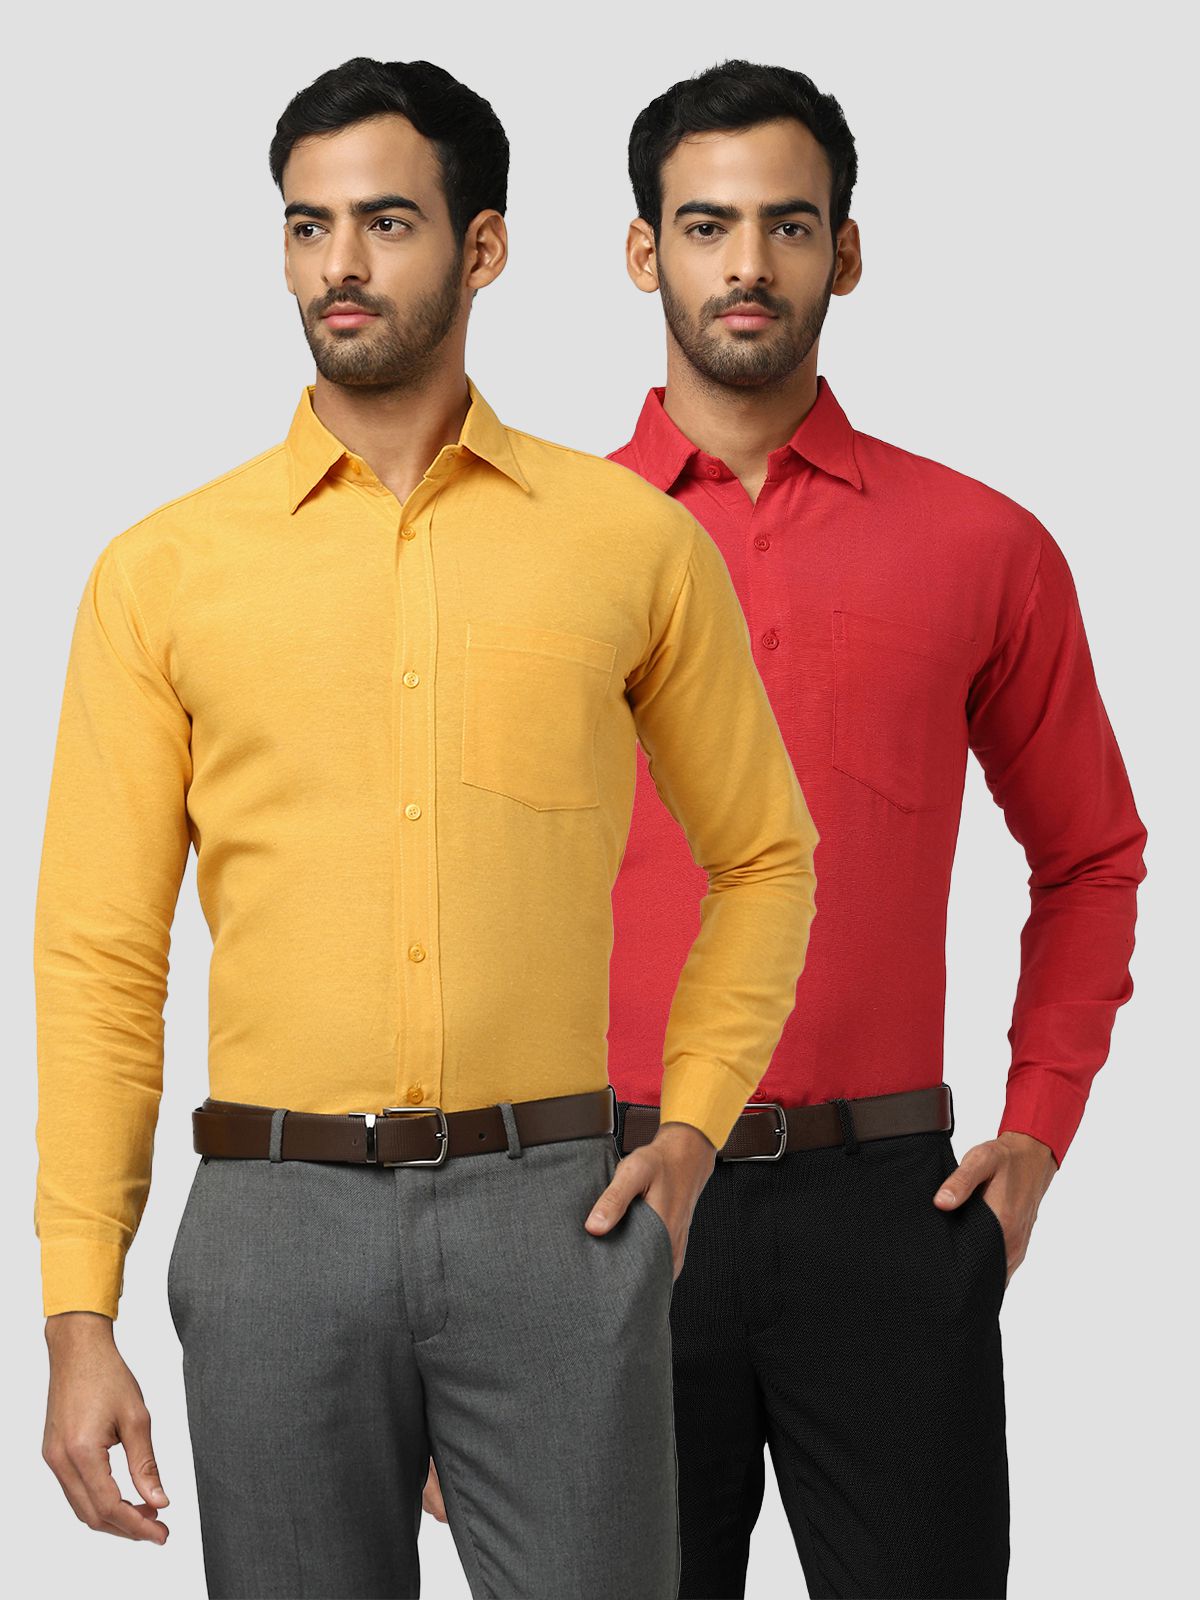     			DESHBANDHU DBK Cotton Multicolor Shirt Pack of 2